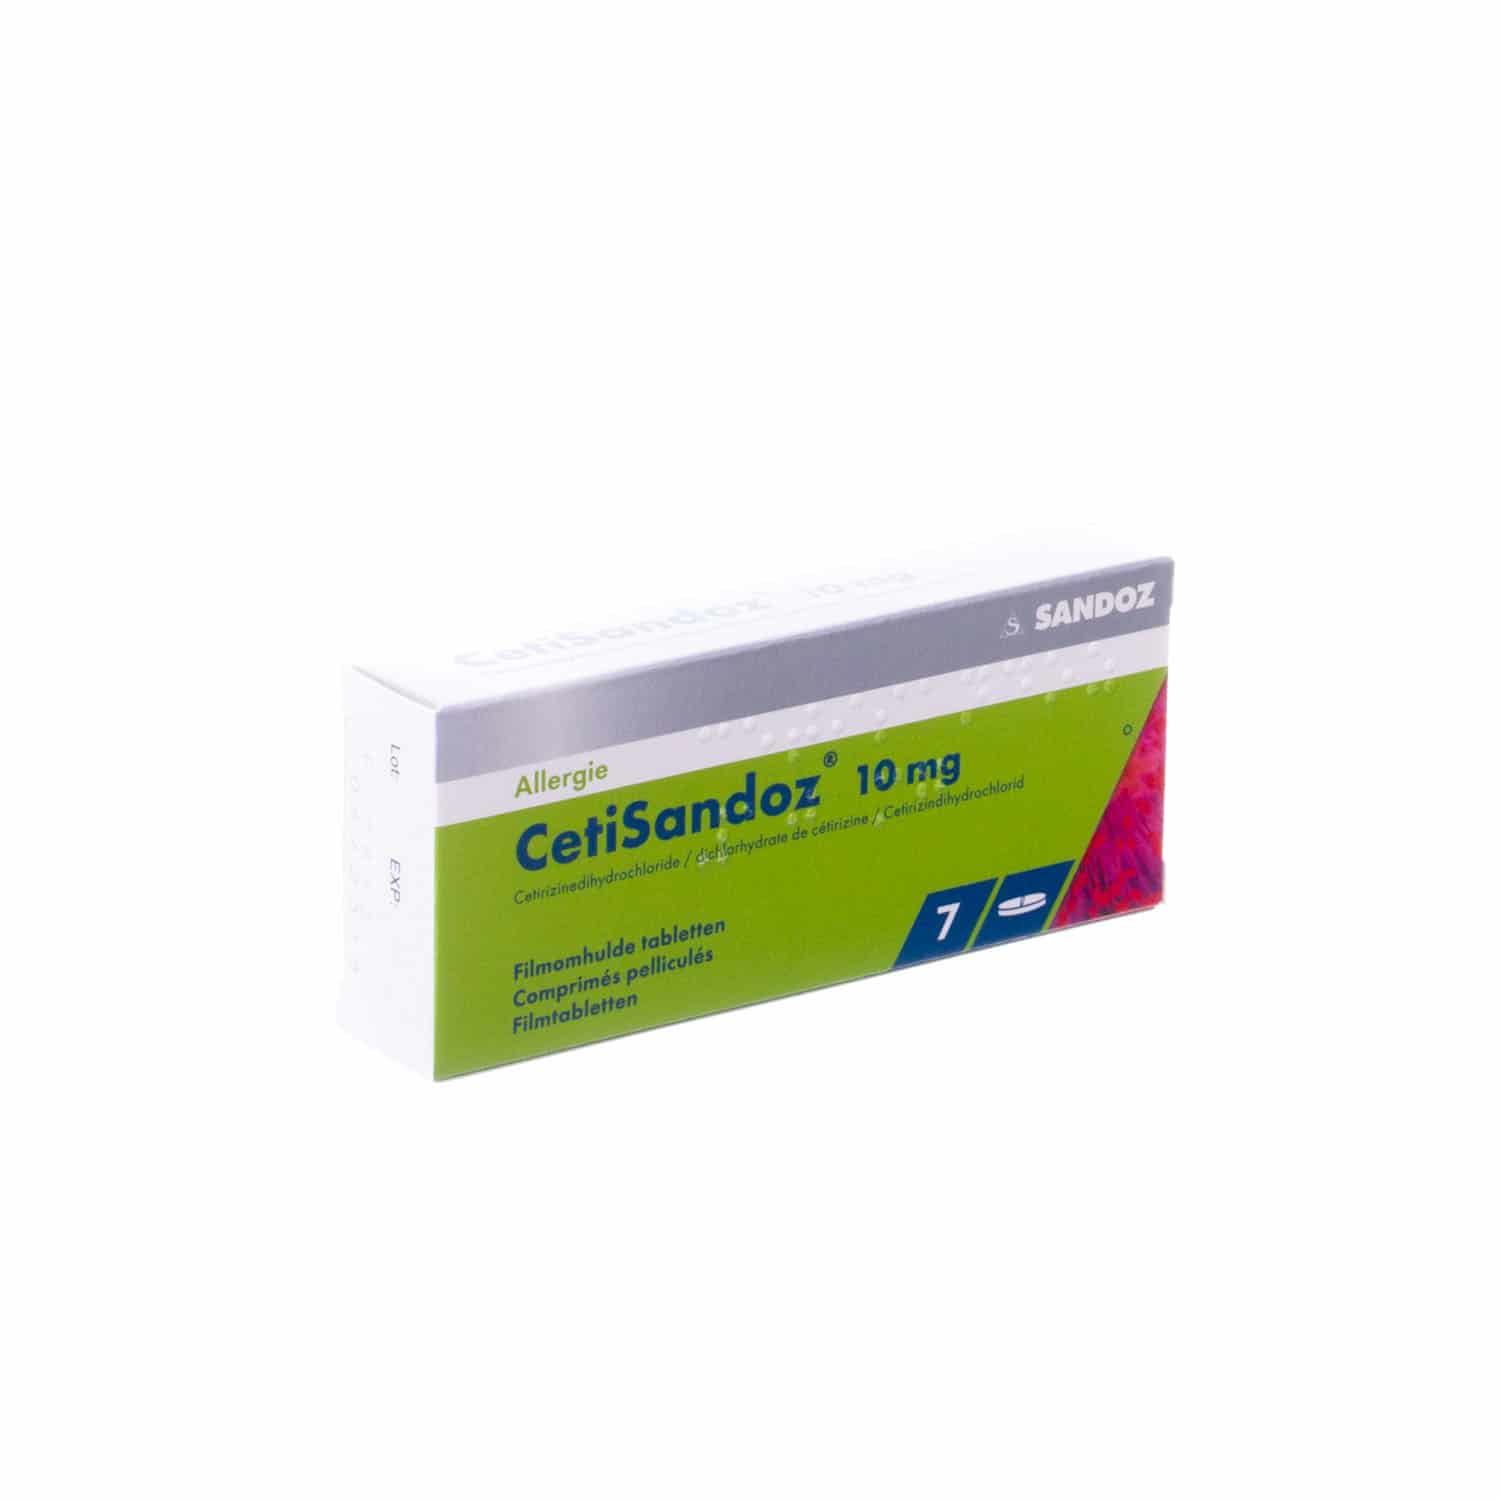 CetiSandoz 10 mg